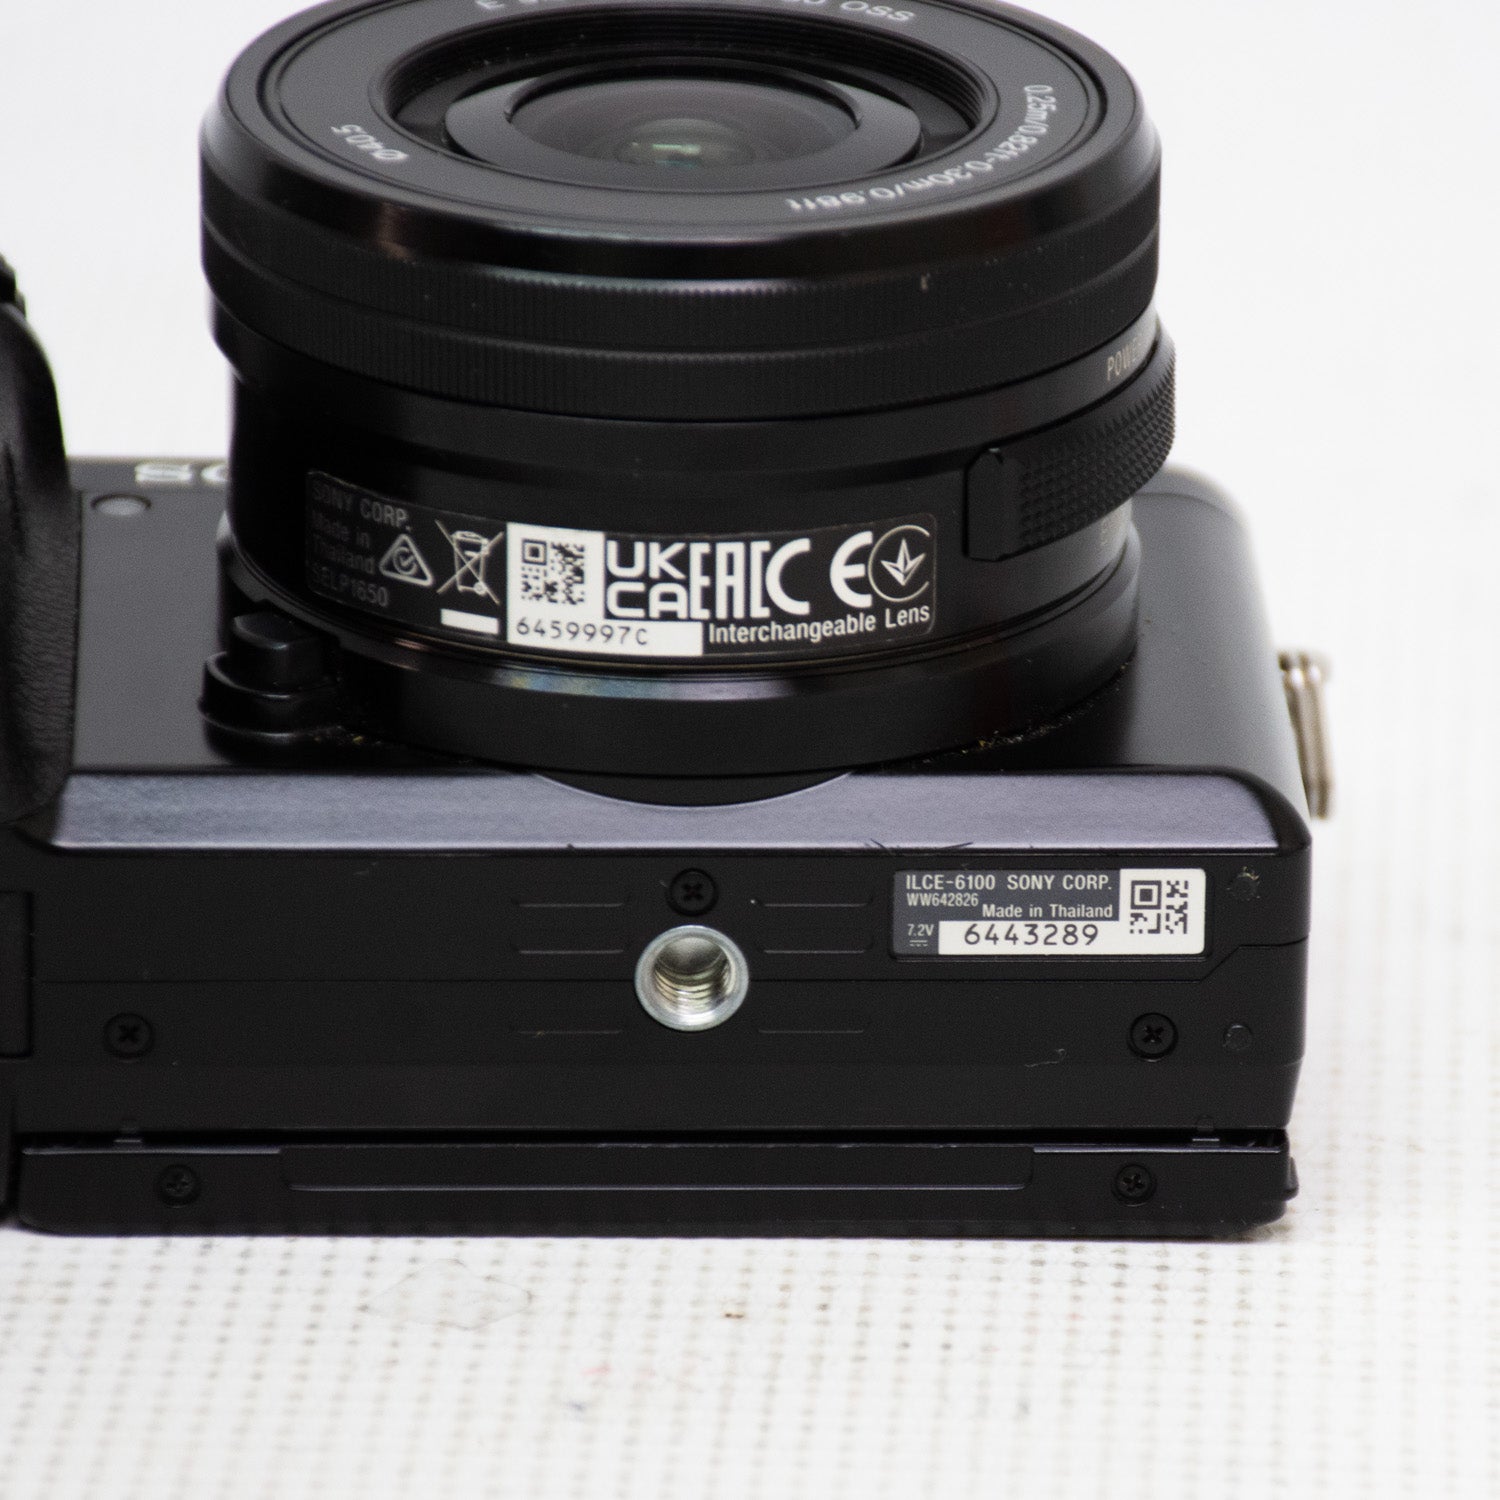 Sony Alpha A6100 24.2MP Mirrorless Camera Set